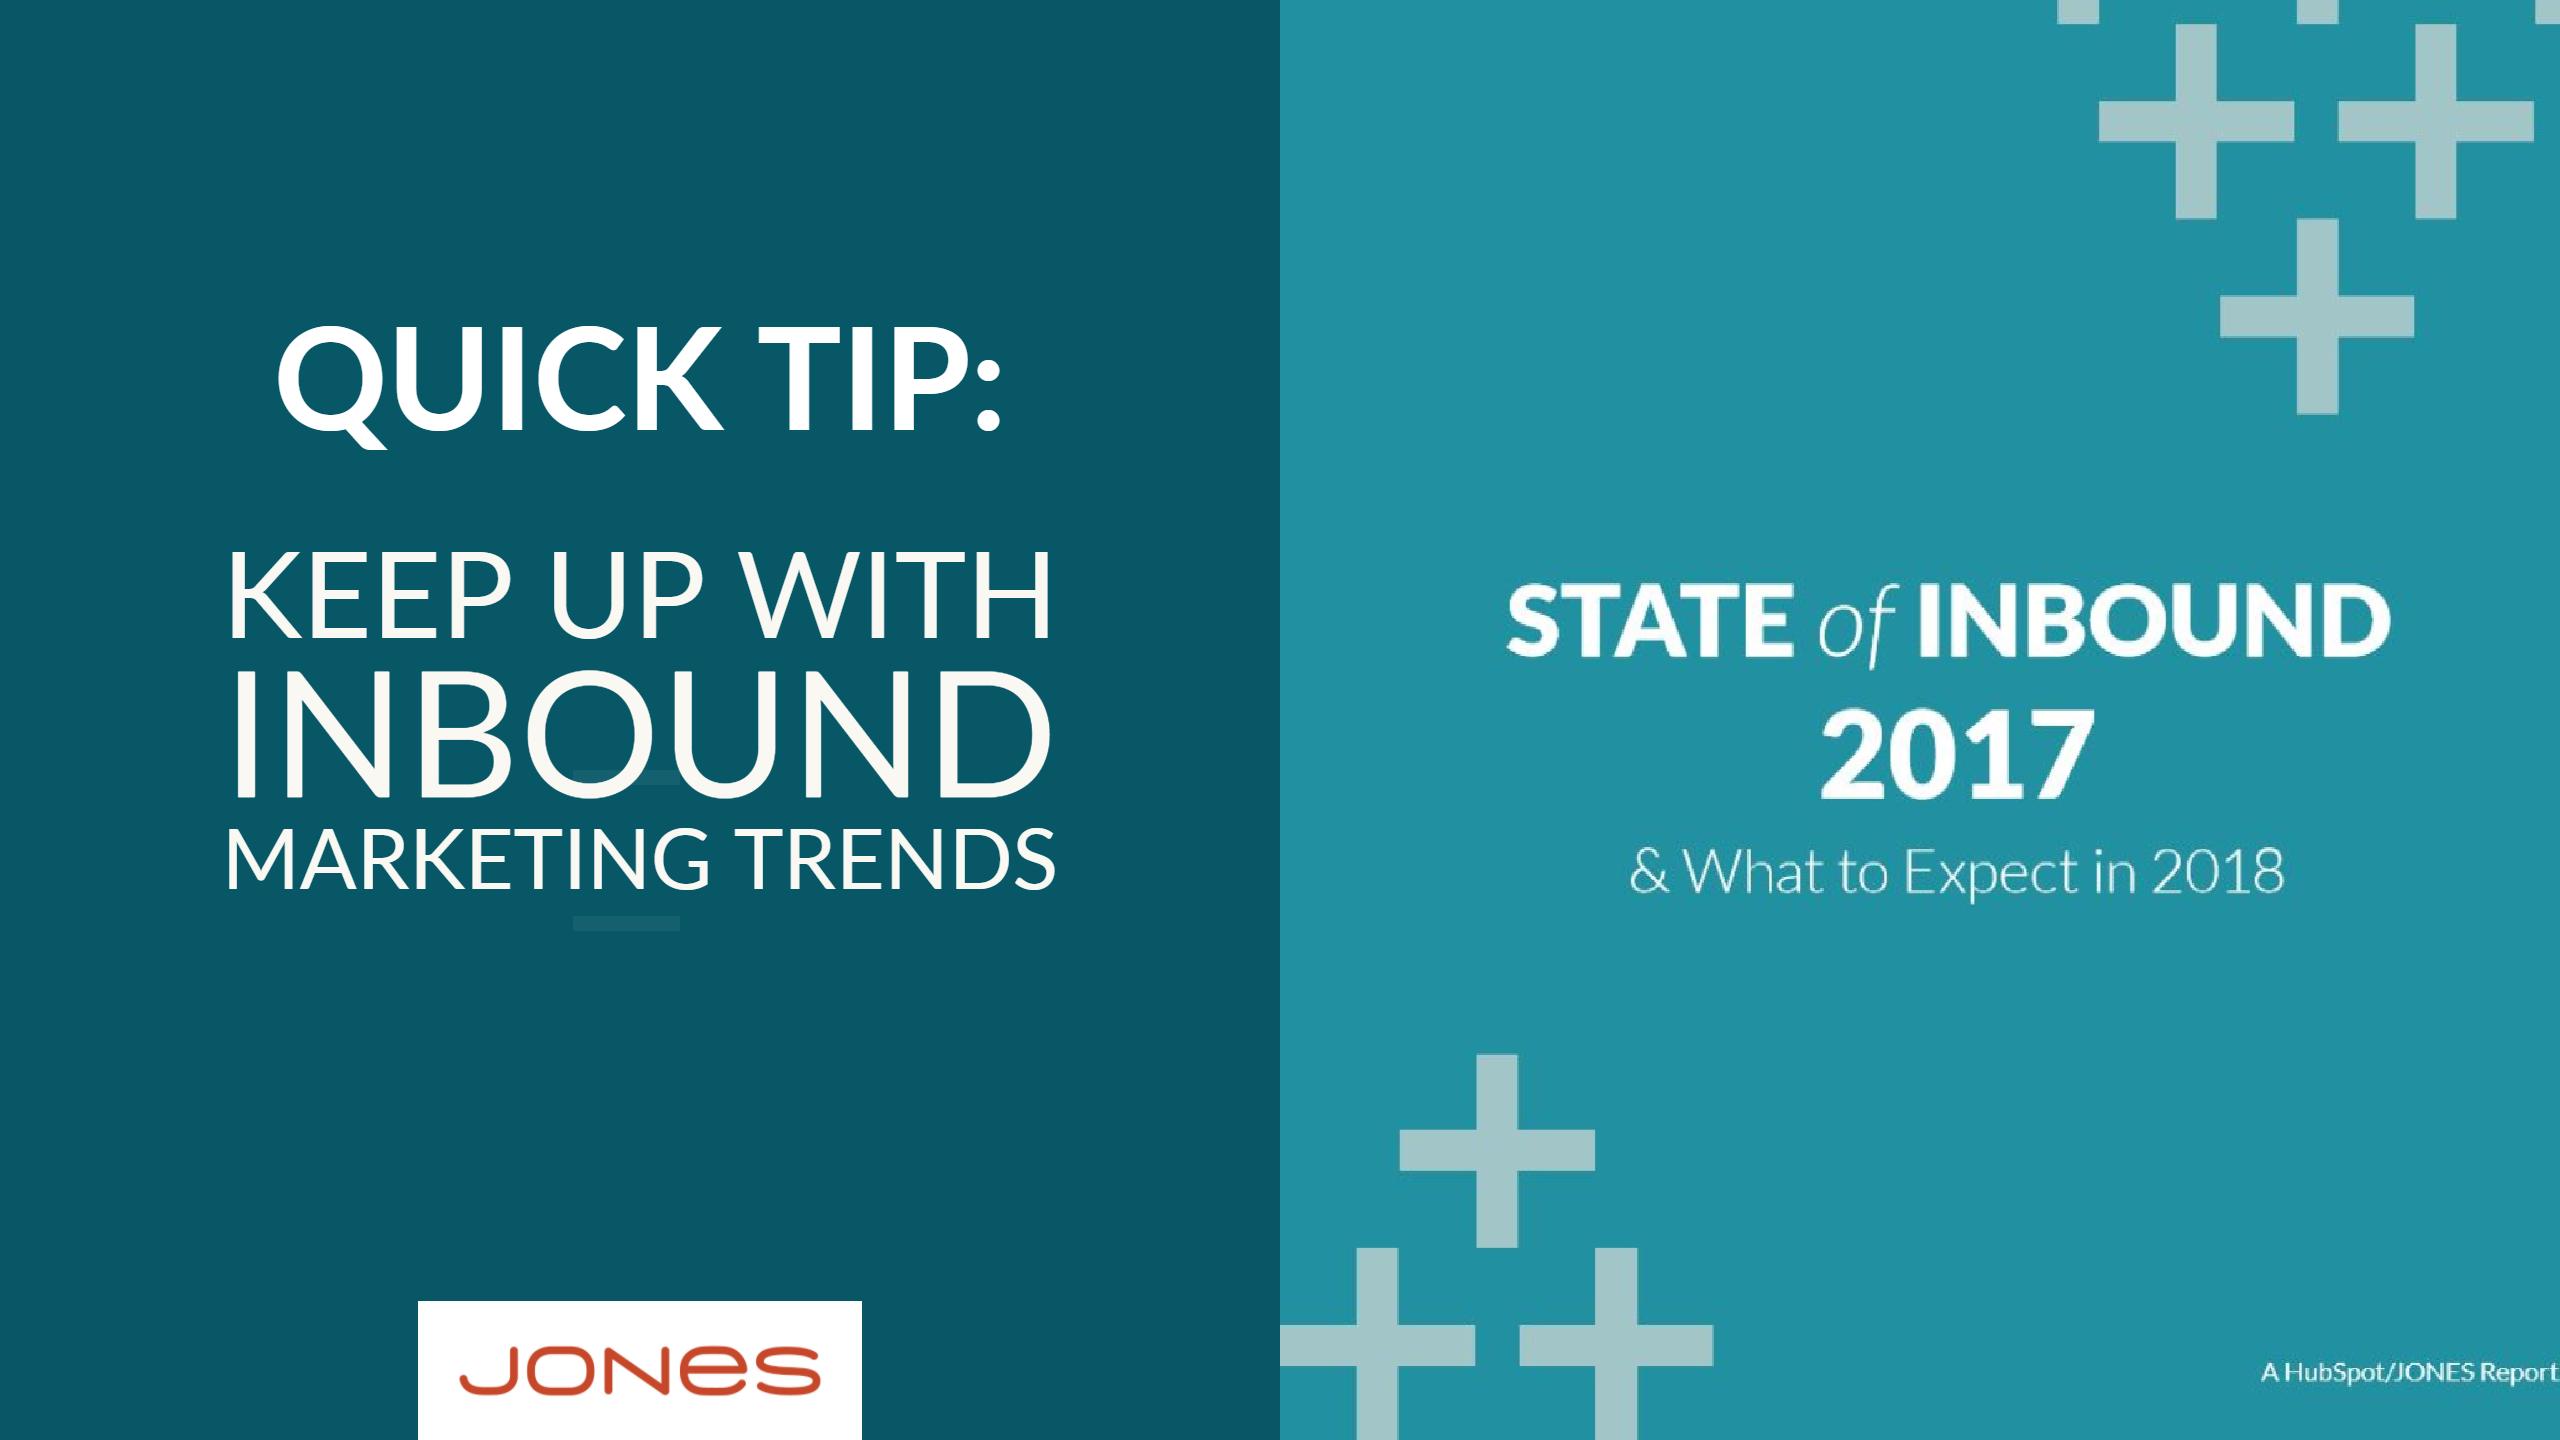 Quick Tip: Keep Up With Inbound Marketing Trends